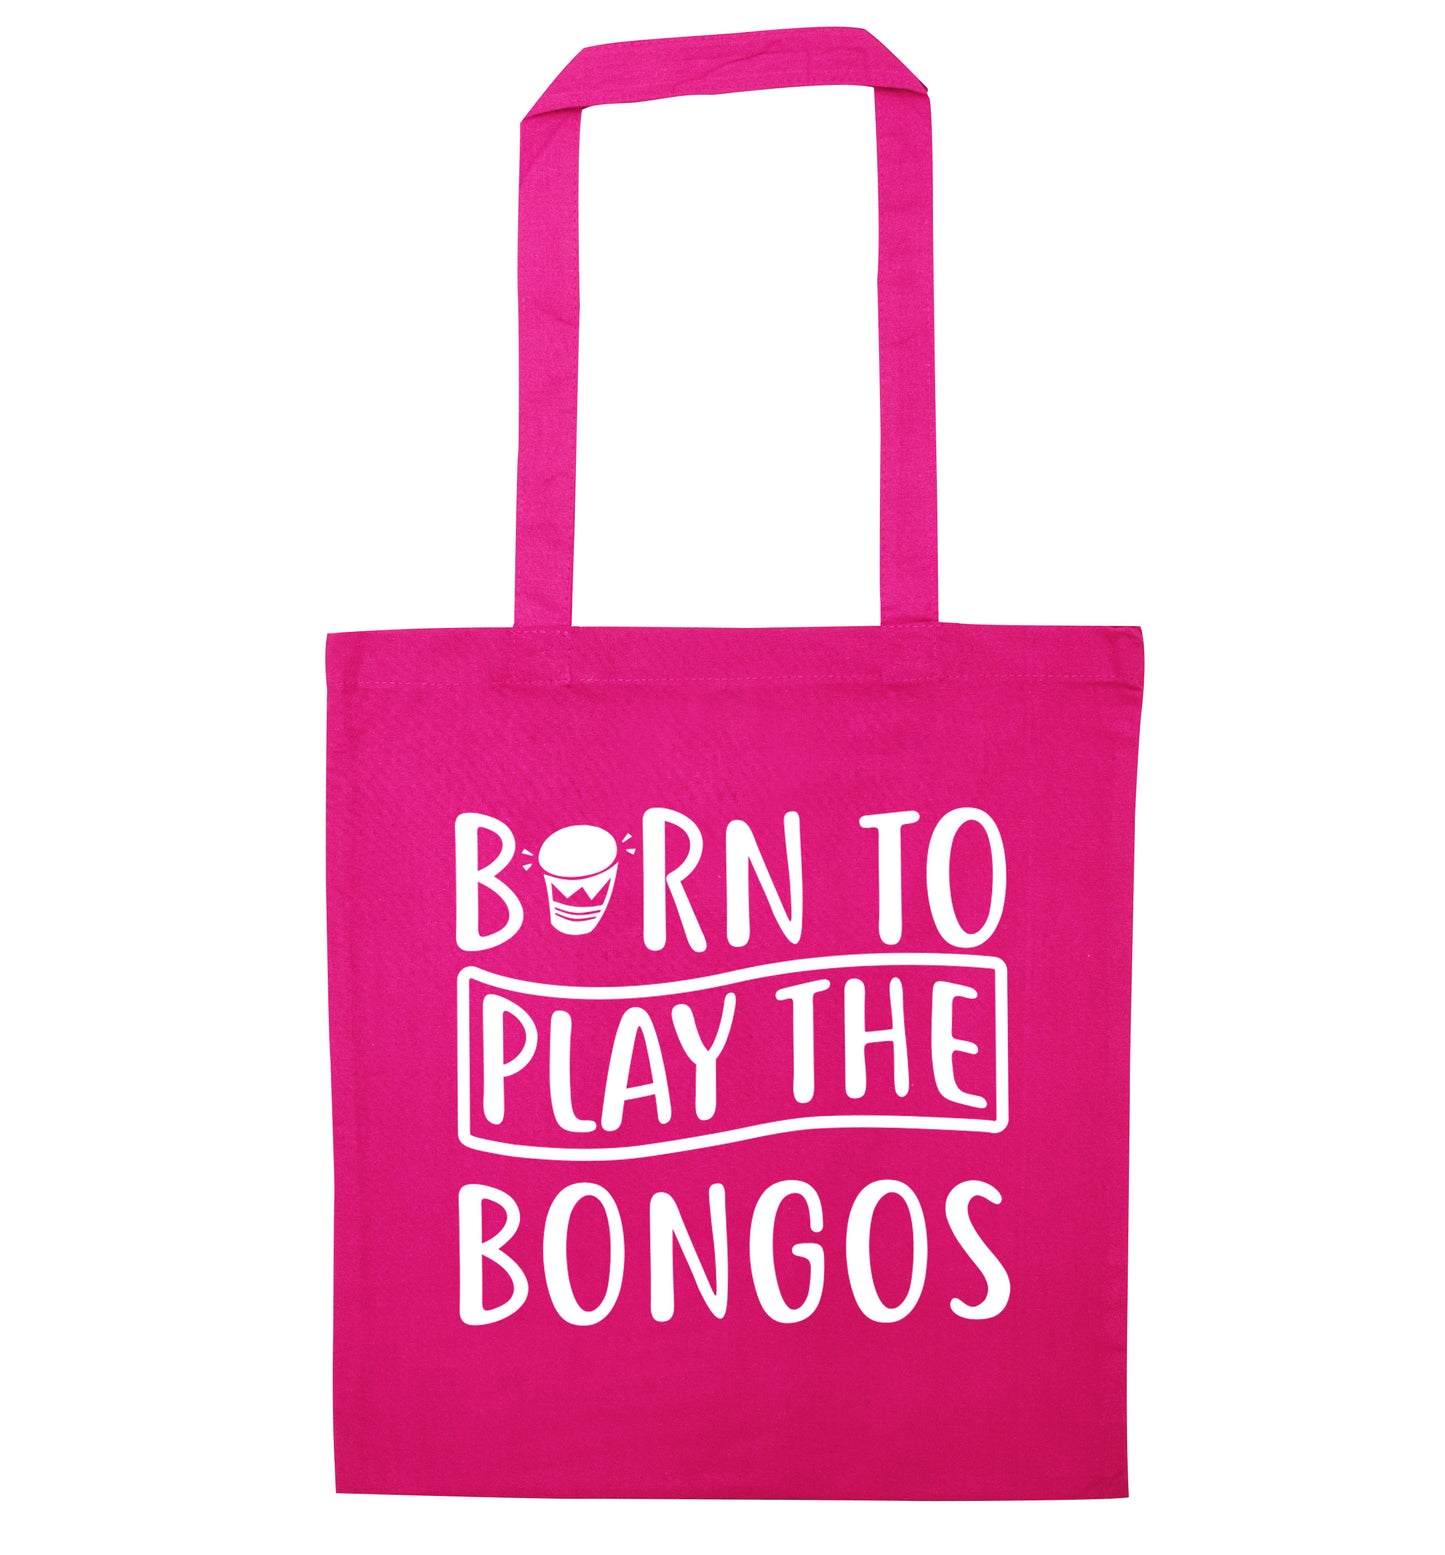 Born to play the bongos pink tote bag